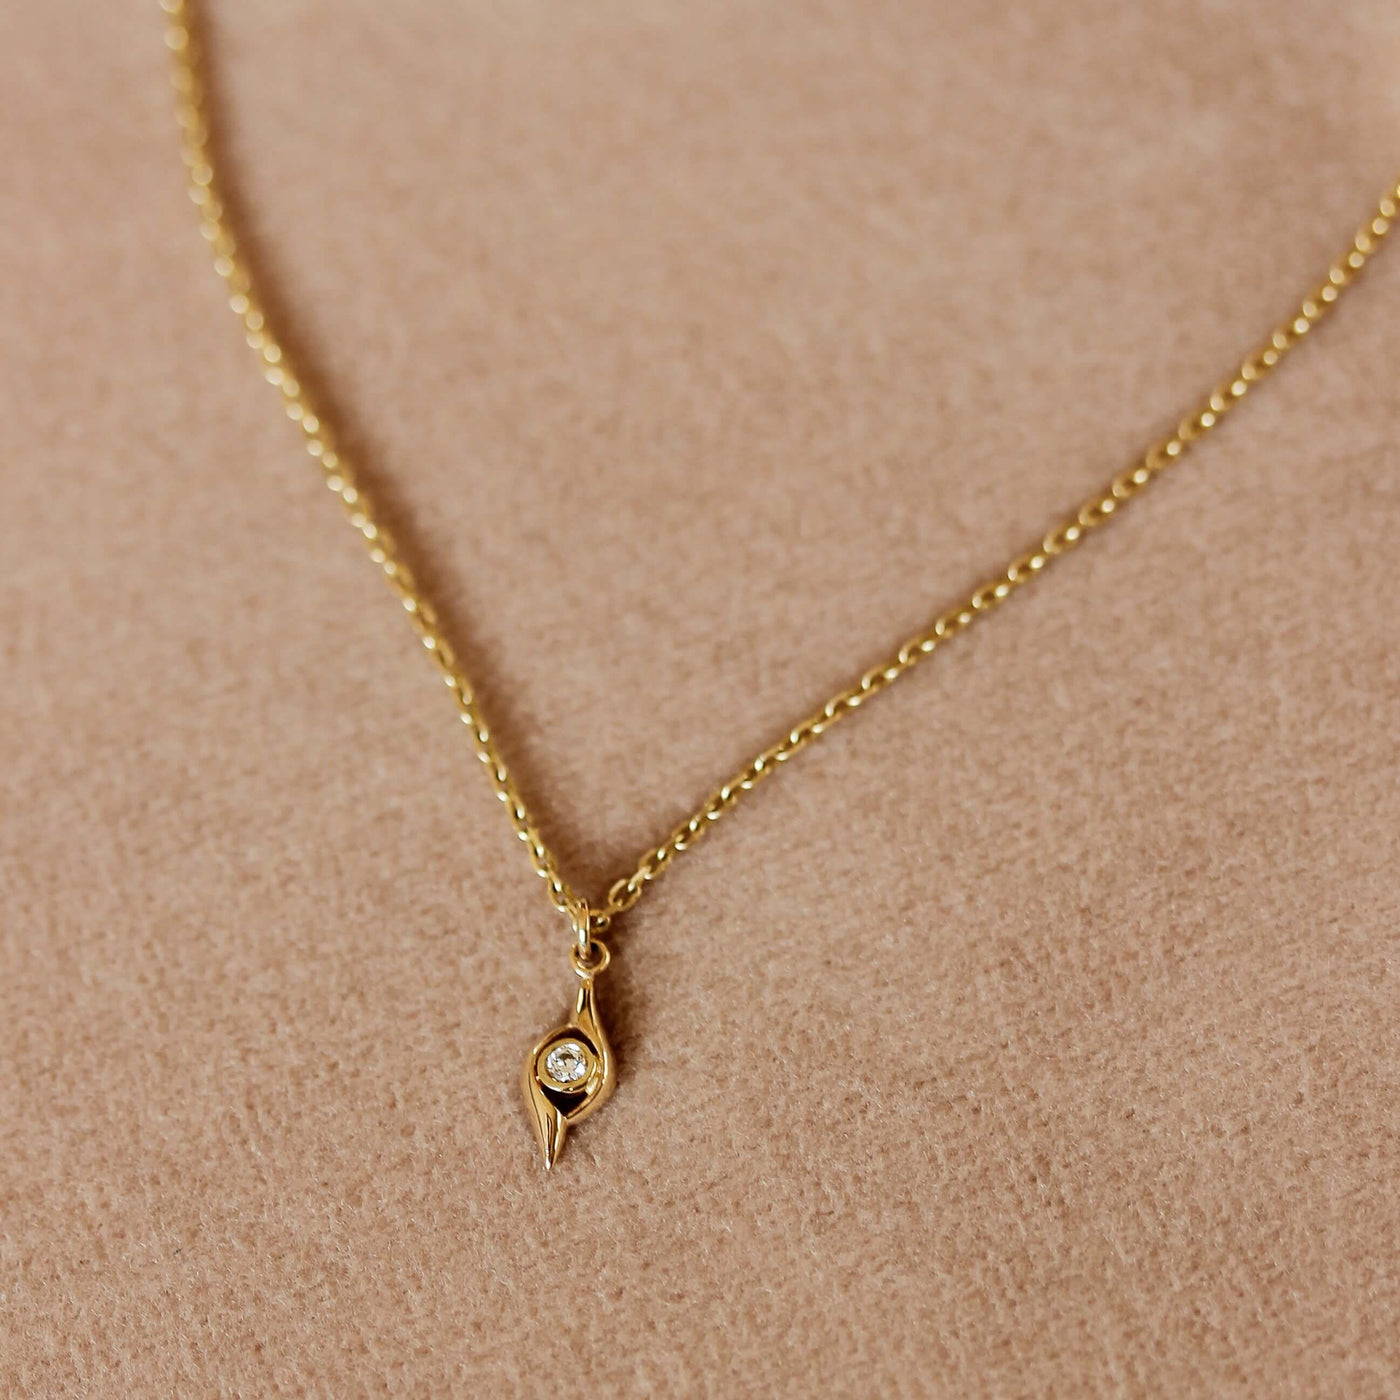 Horus Eye Necklace 14K Gold White Diamond Necklaces 